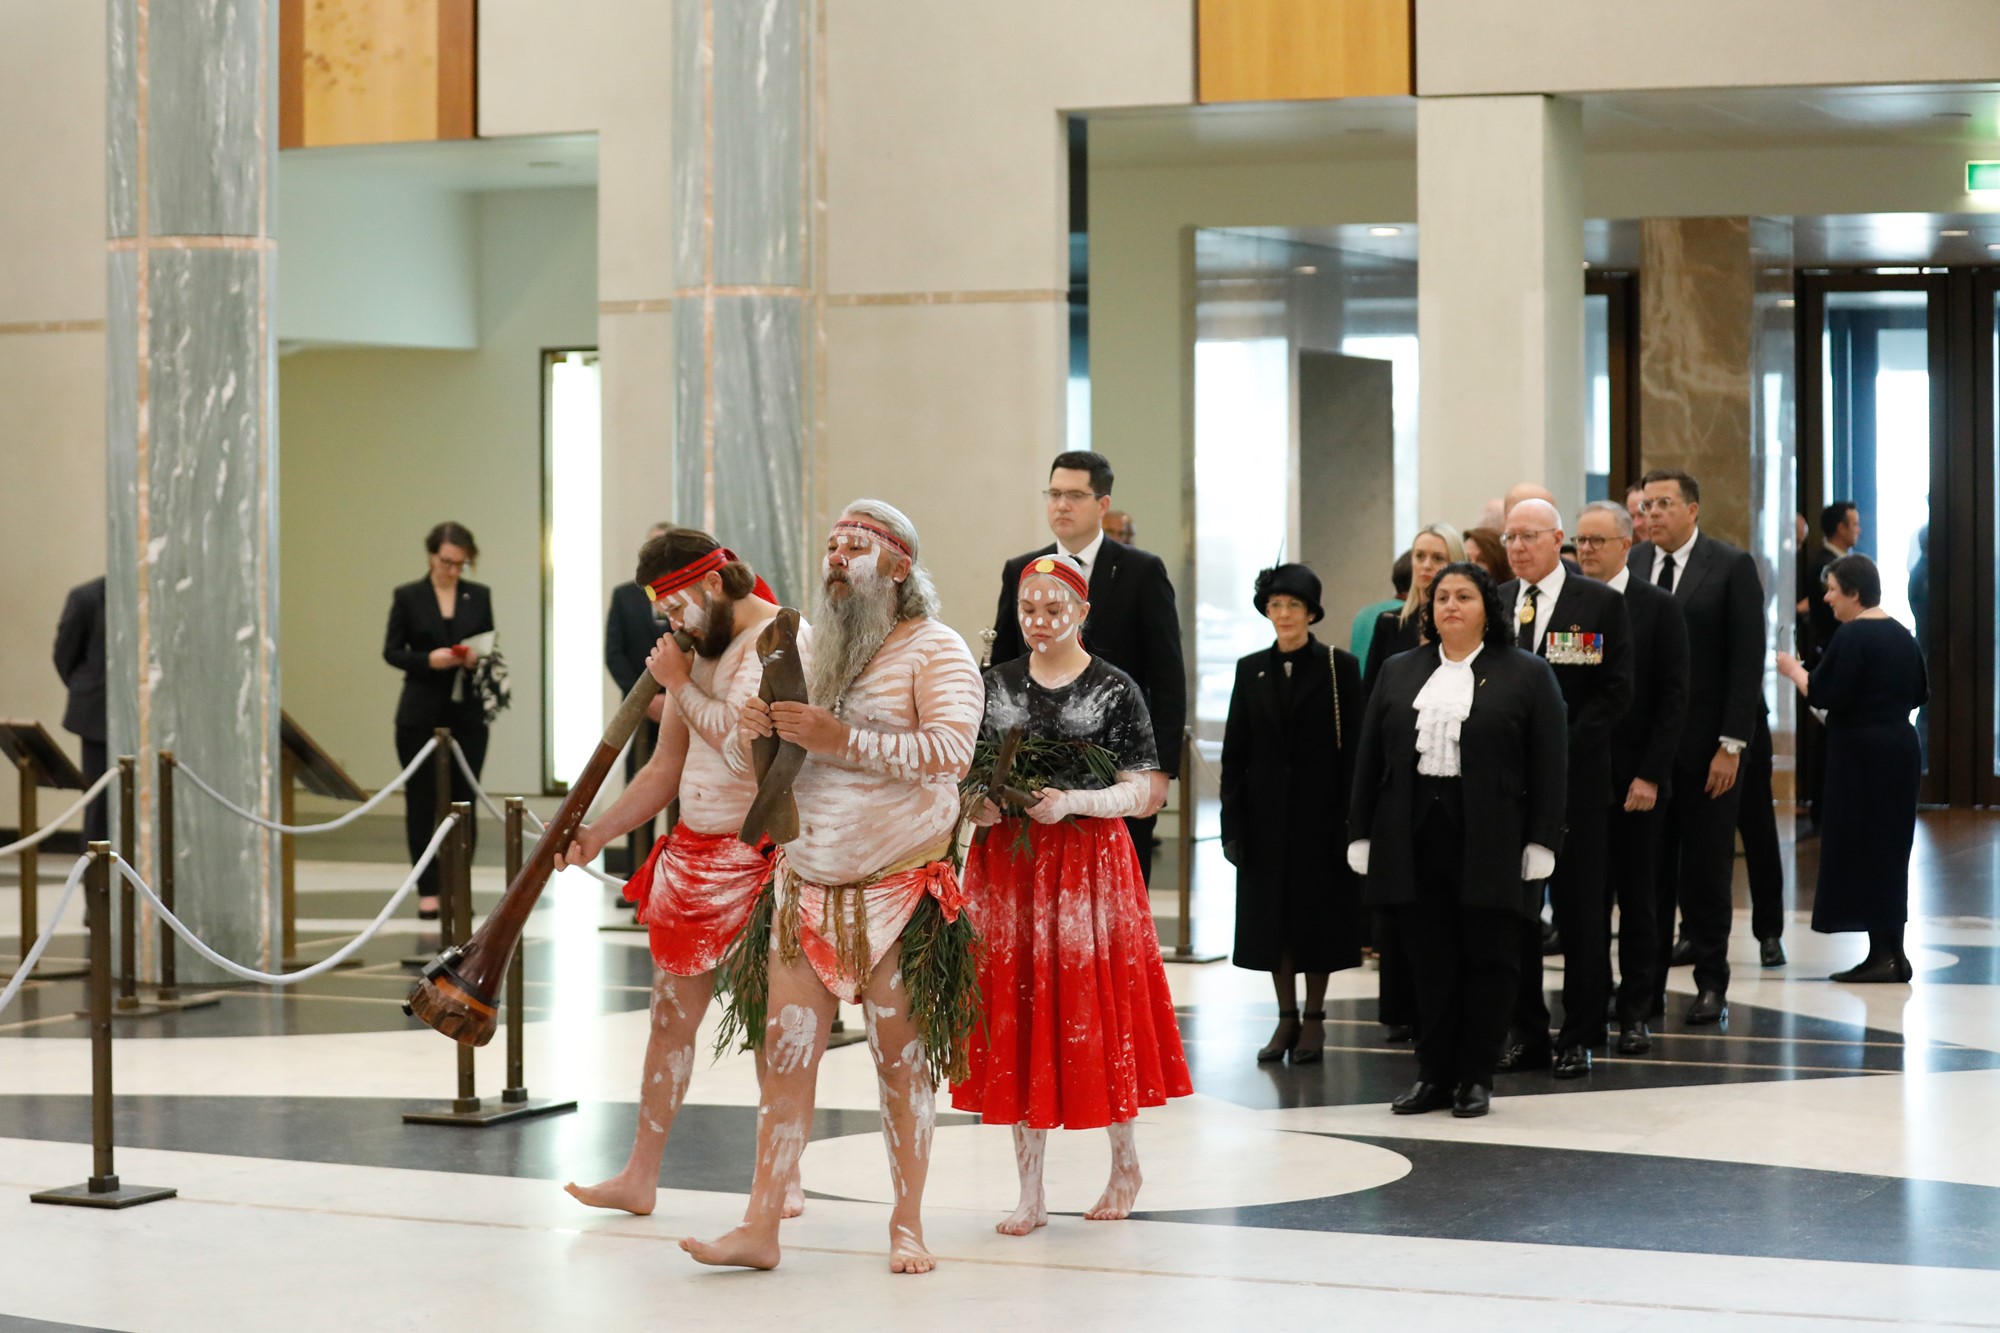 Indigenous dancers walk through Parliament House.